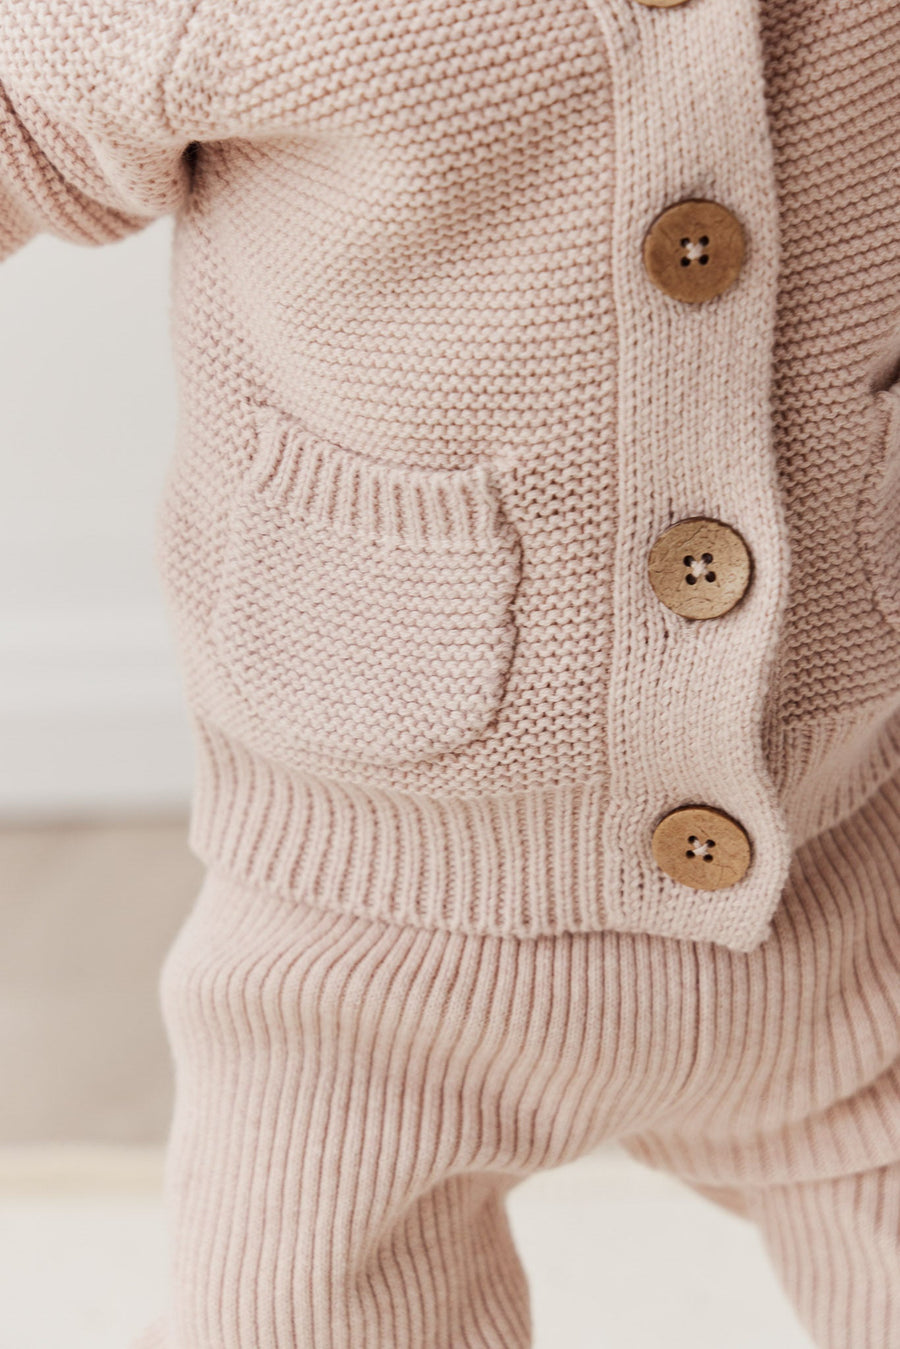 Sebastian Knitted Cardigan/Jacket - Ballet Pink Marle Childrens Cardigan from Jamie Kay USA